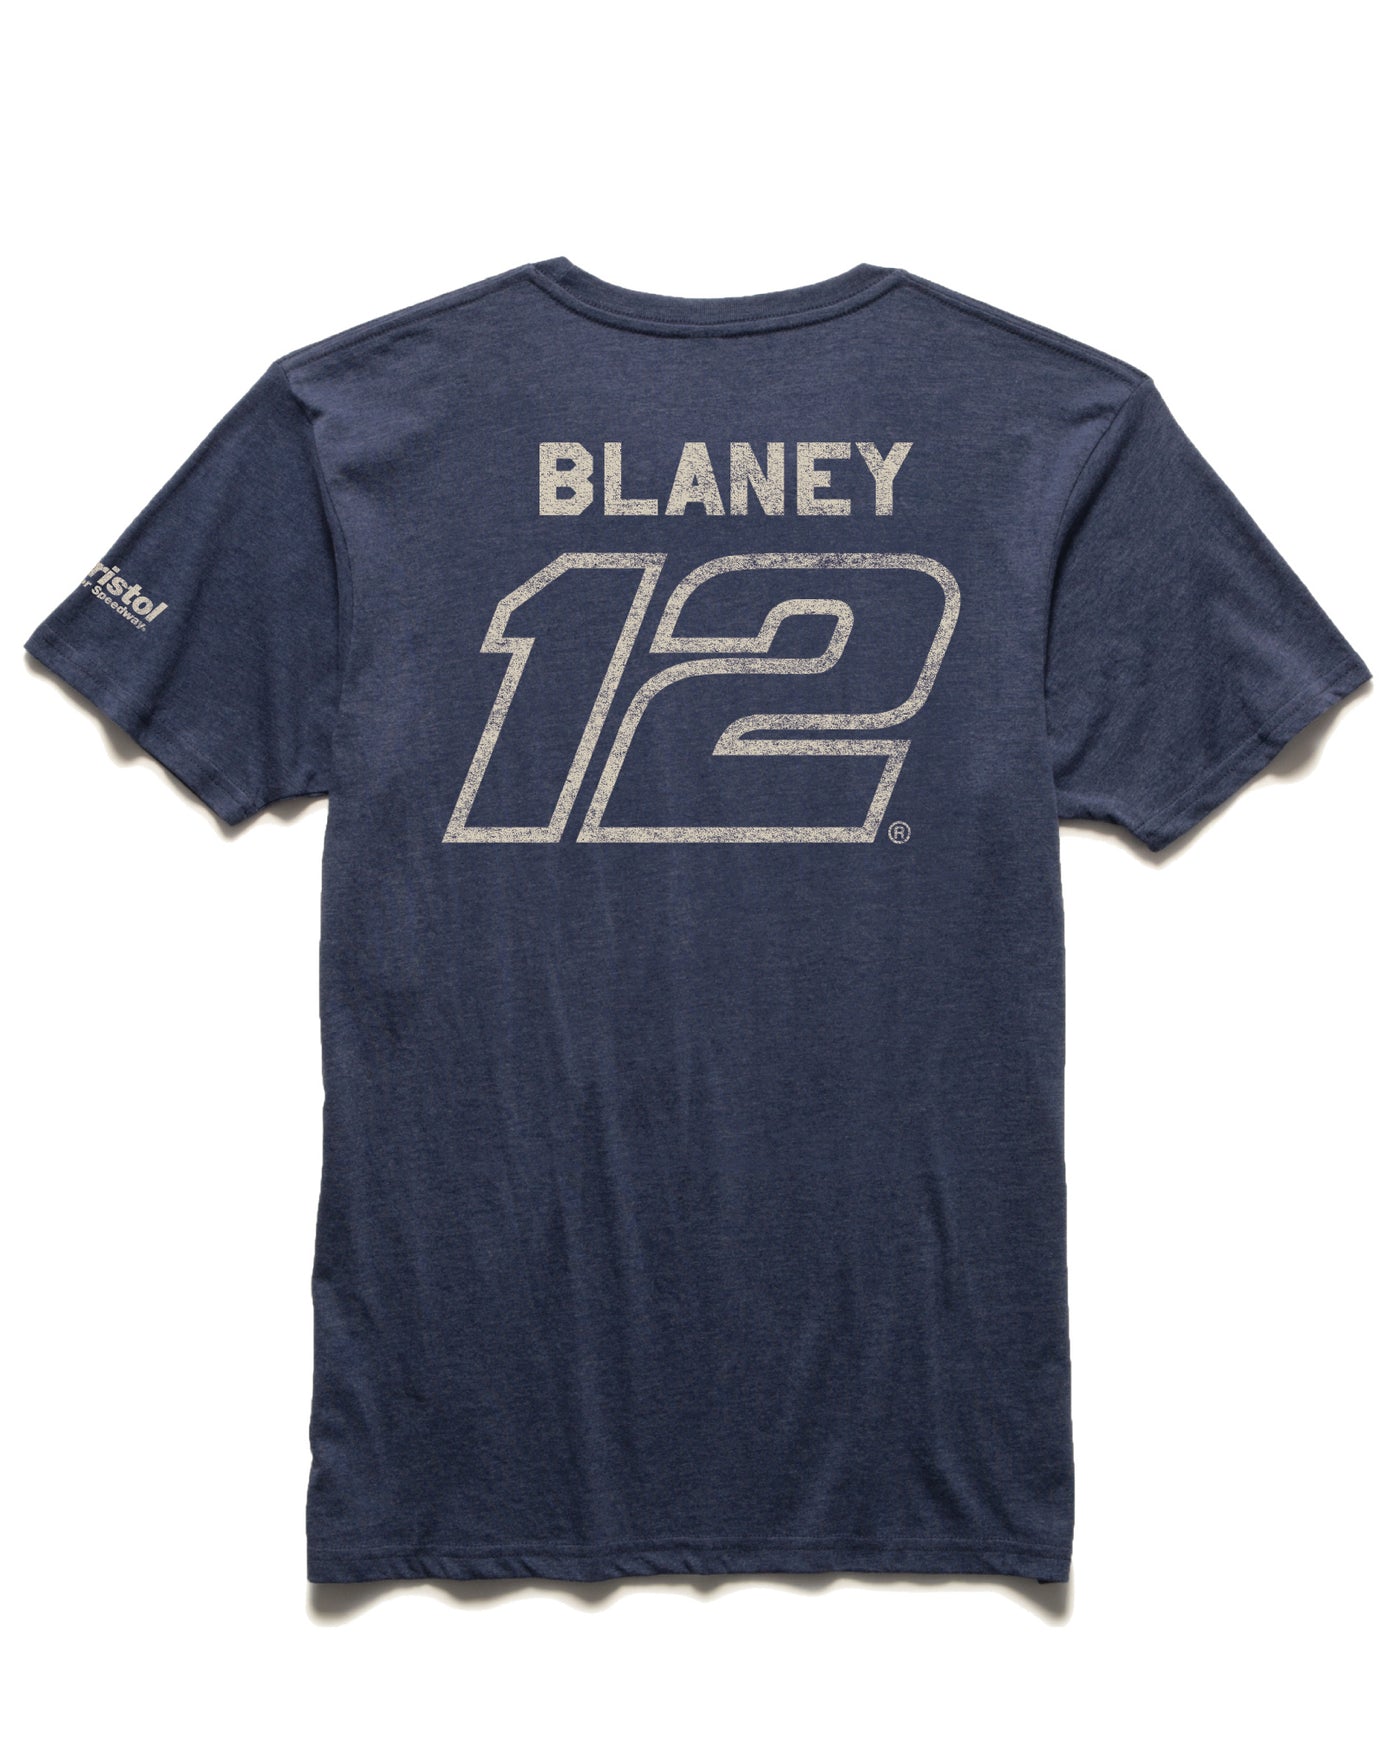 BLANEY #12 BRISTOL SS TEE